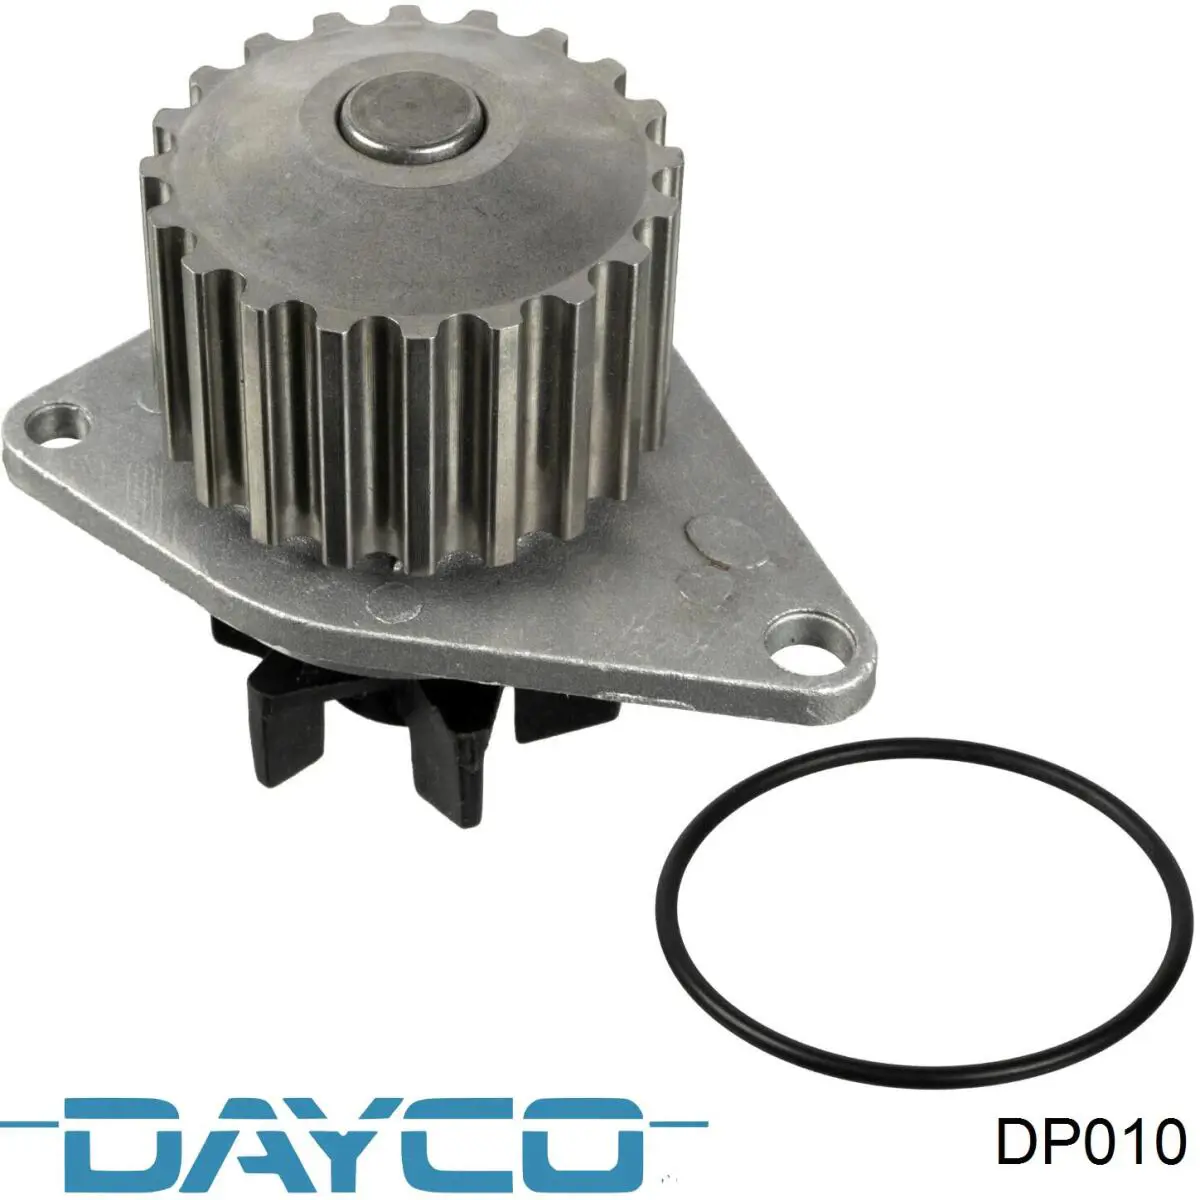 DP010 Dayco bomba de agua